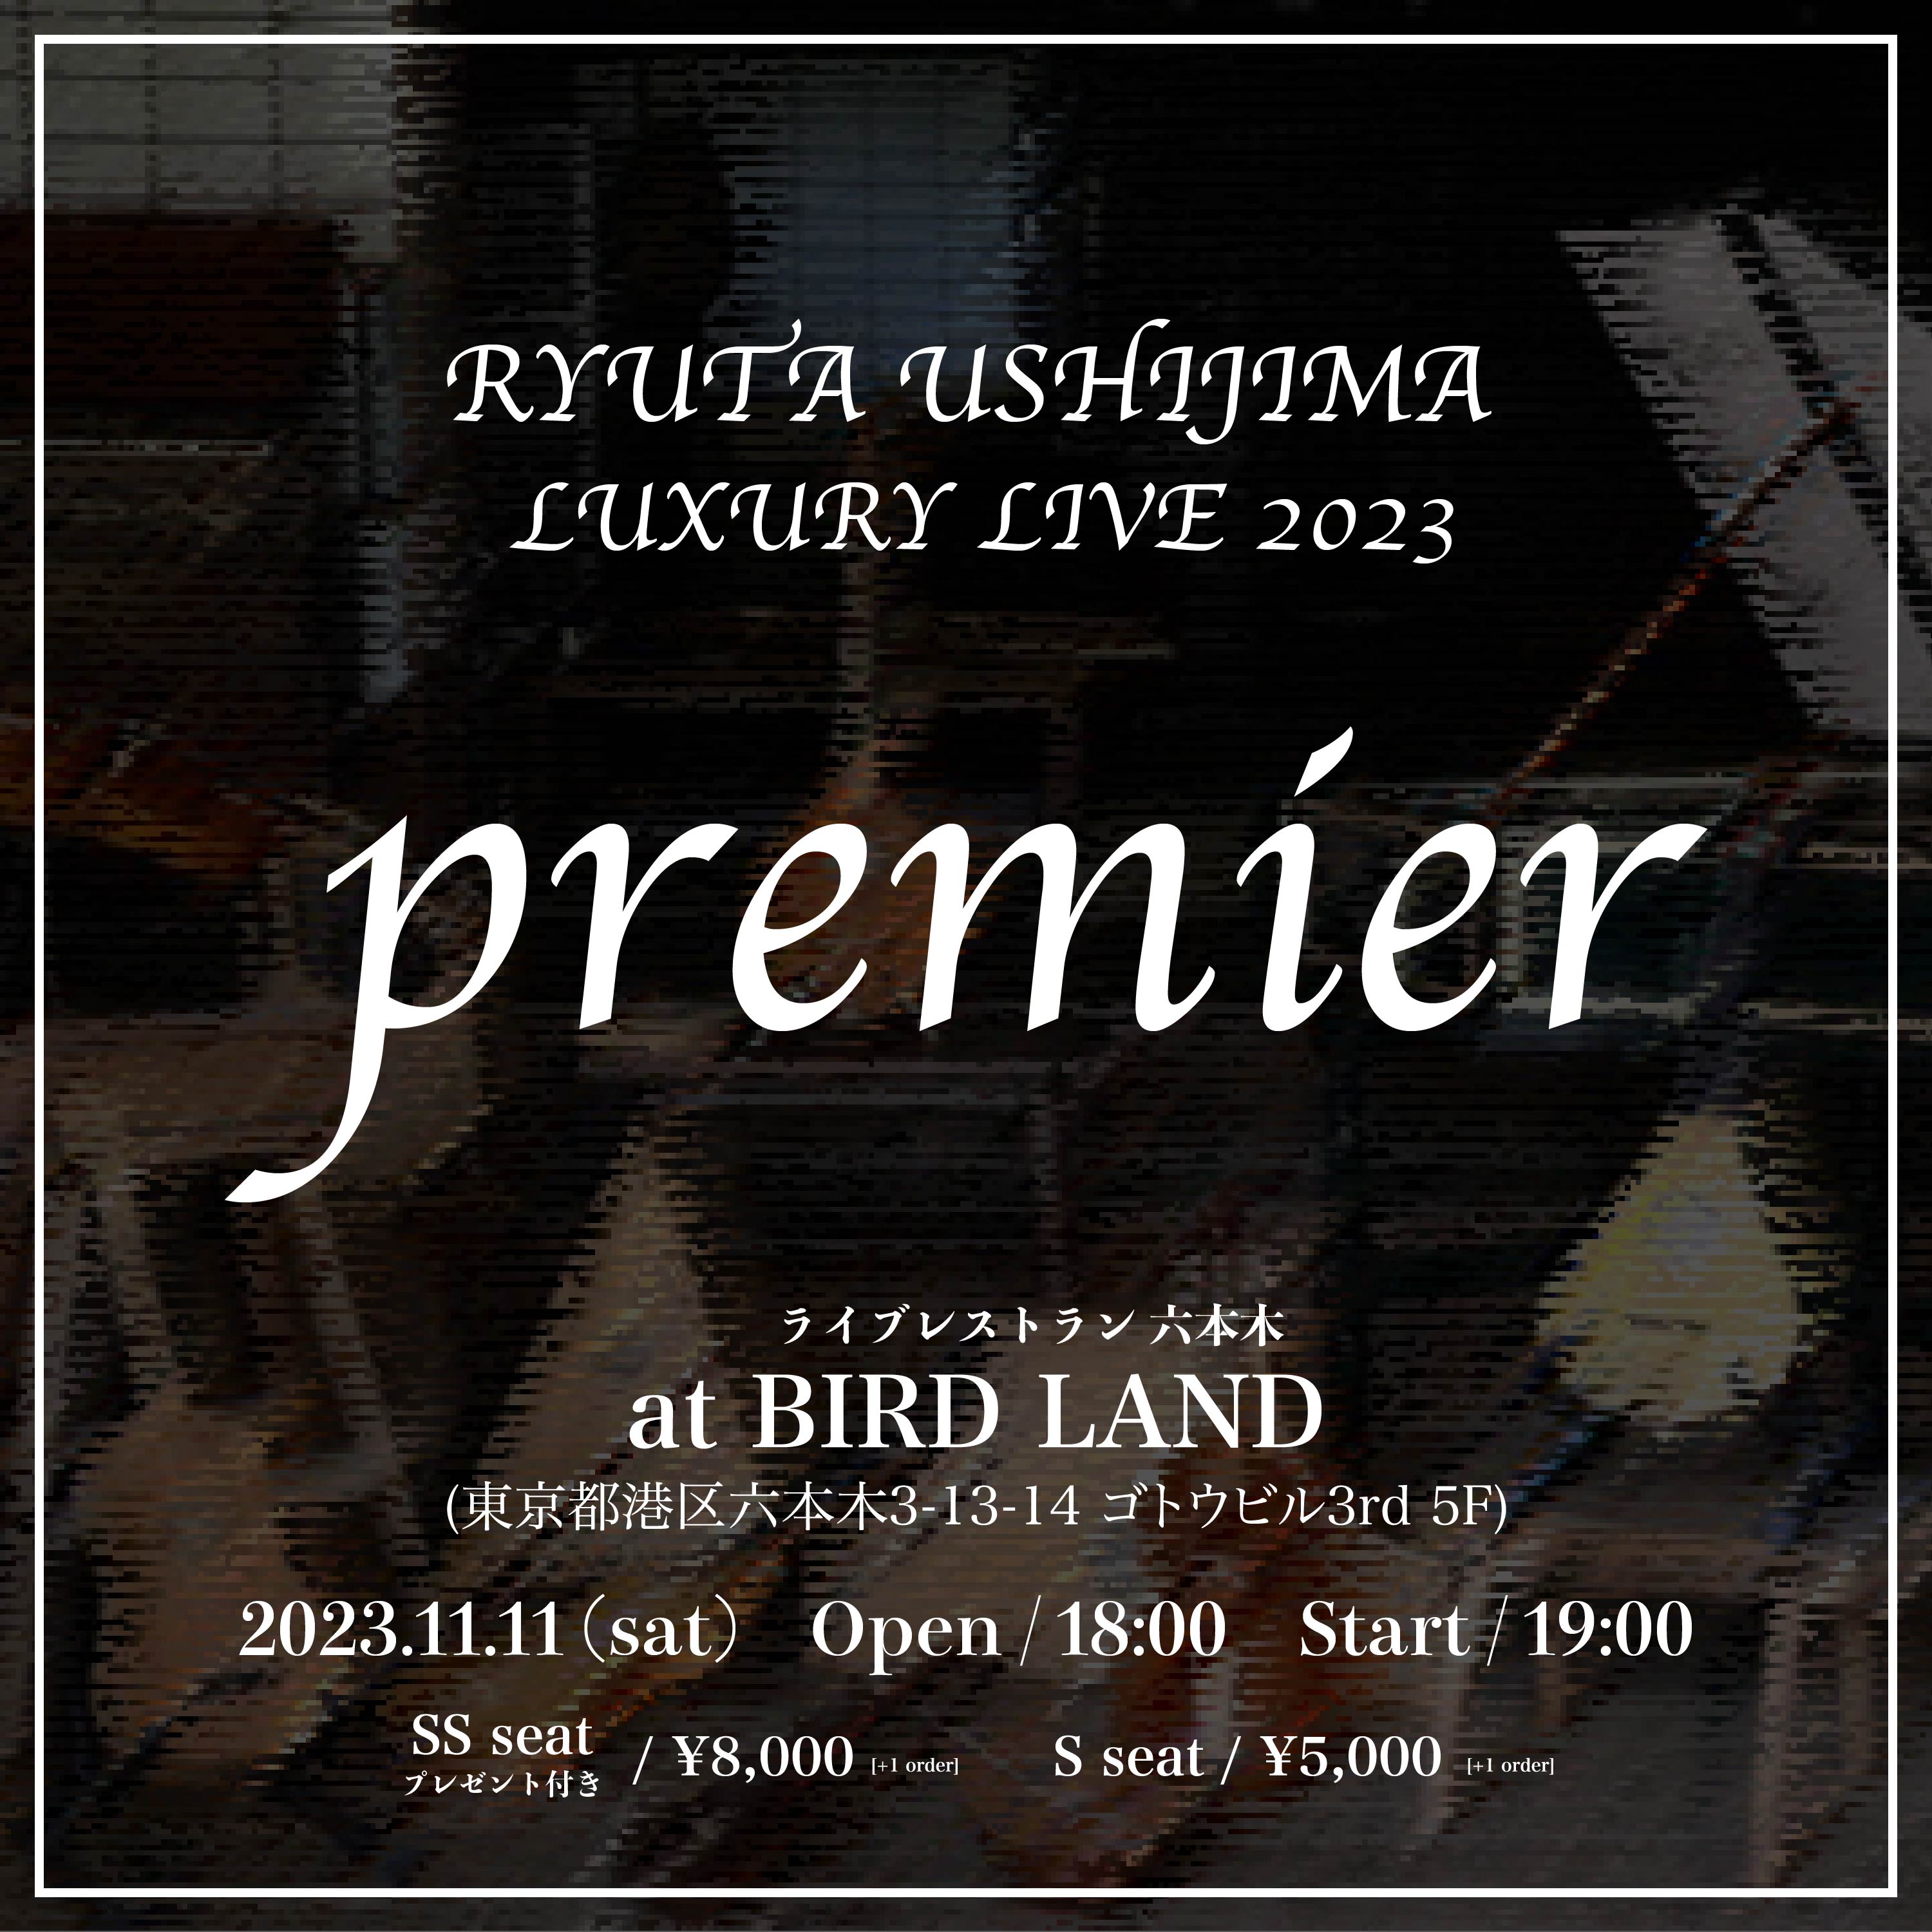 牛島隆太LuxuryLive 2023 "premier"  at BIRD LAND